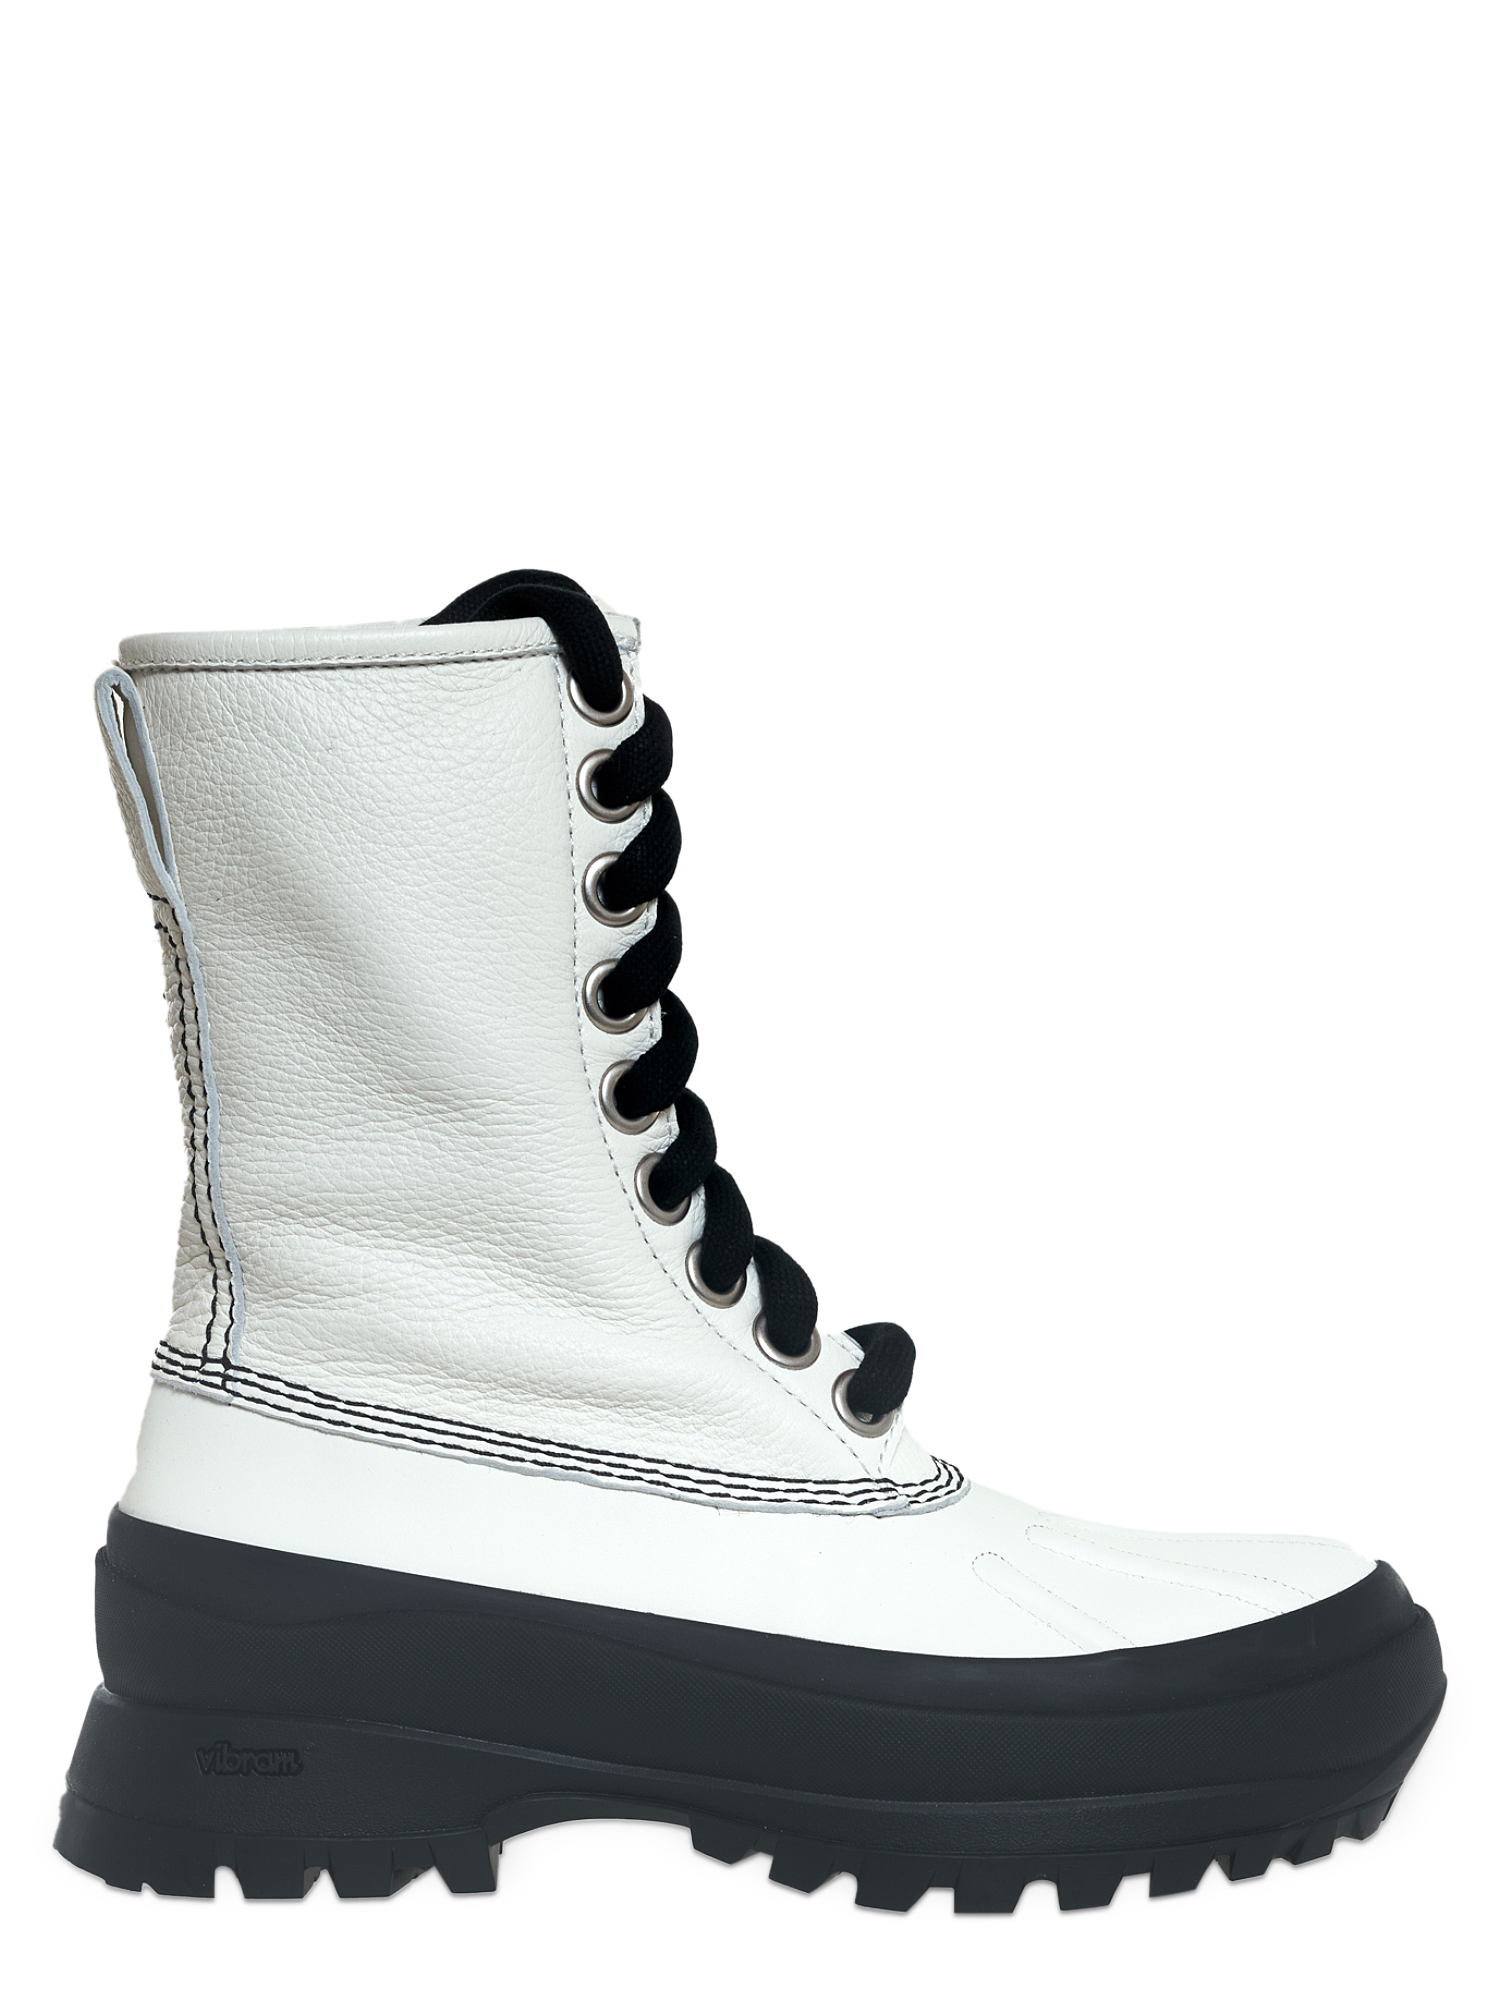 Women's Boots - Jil Sander - In White Leather